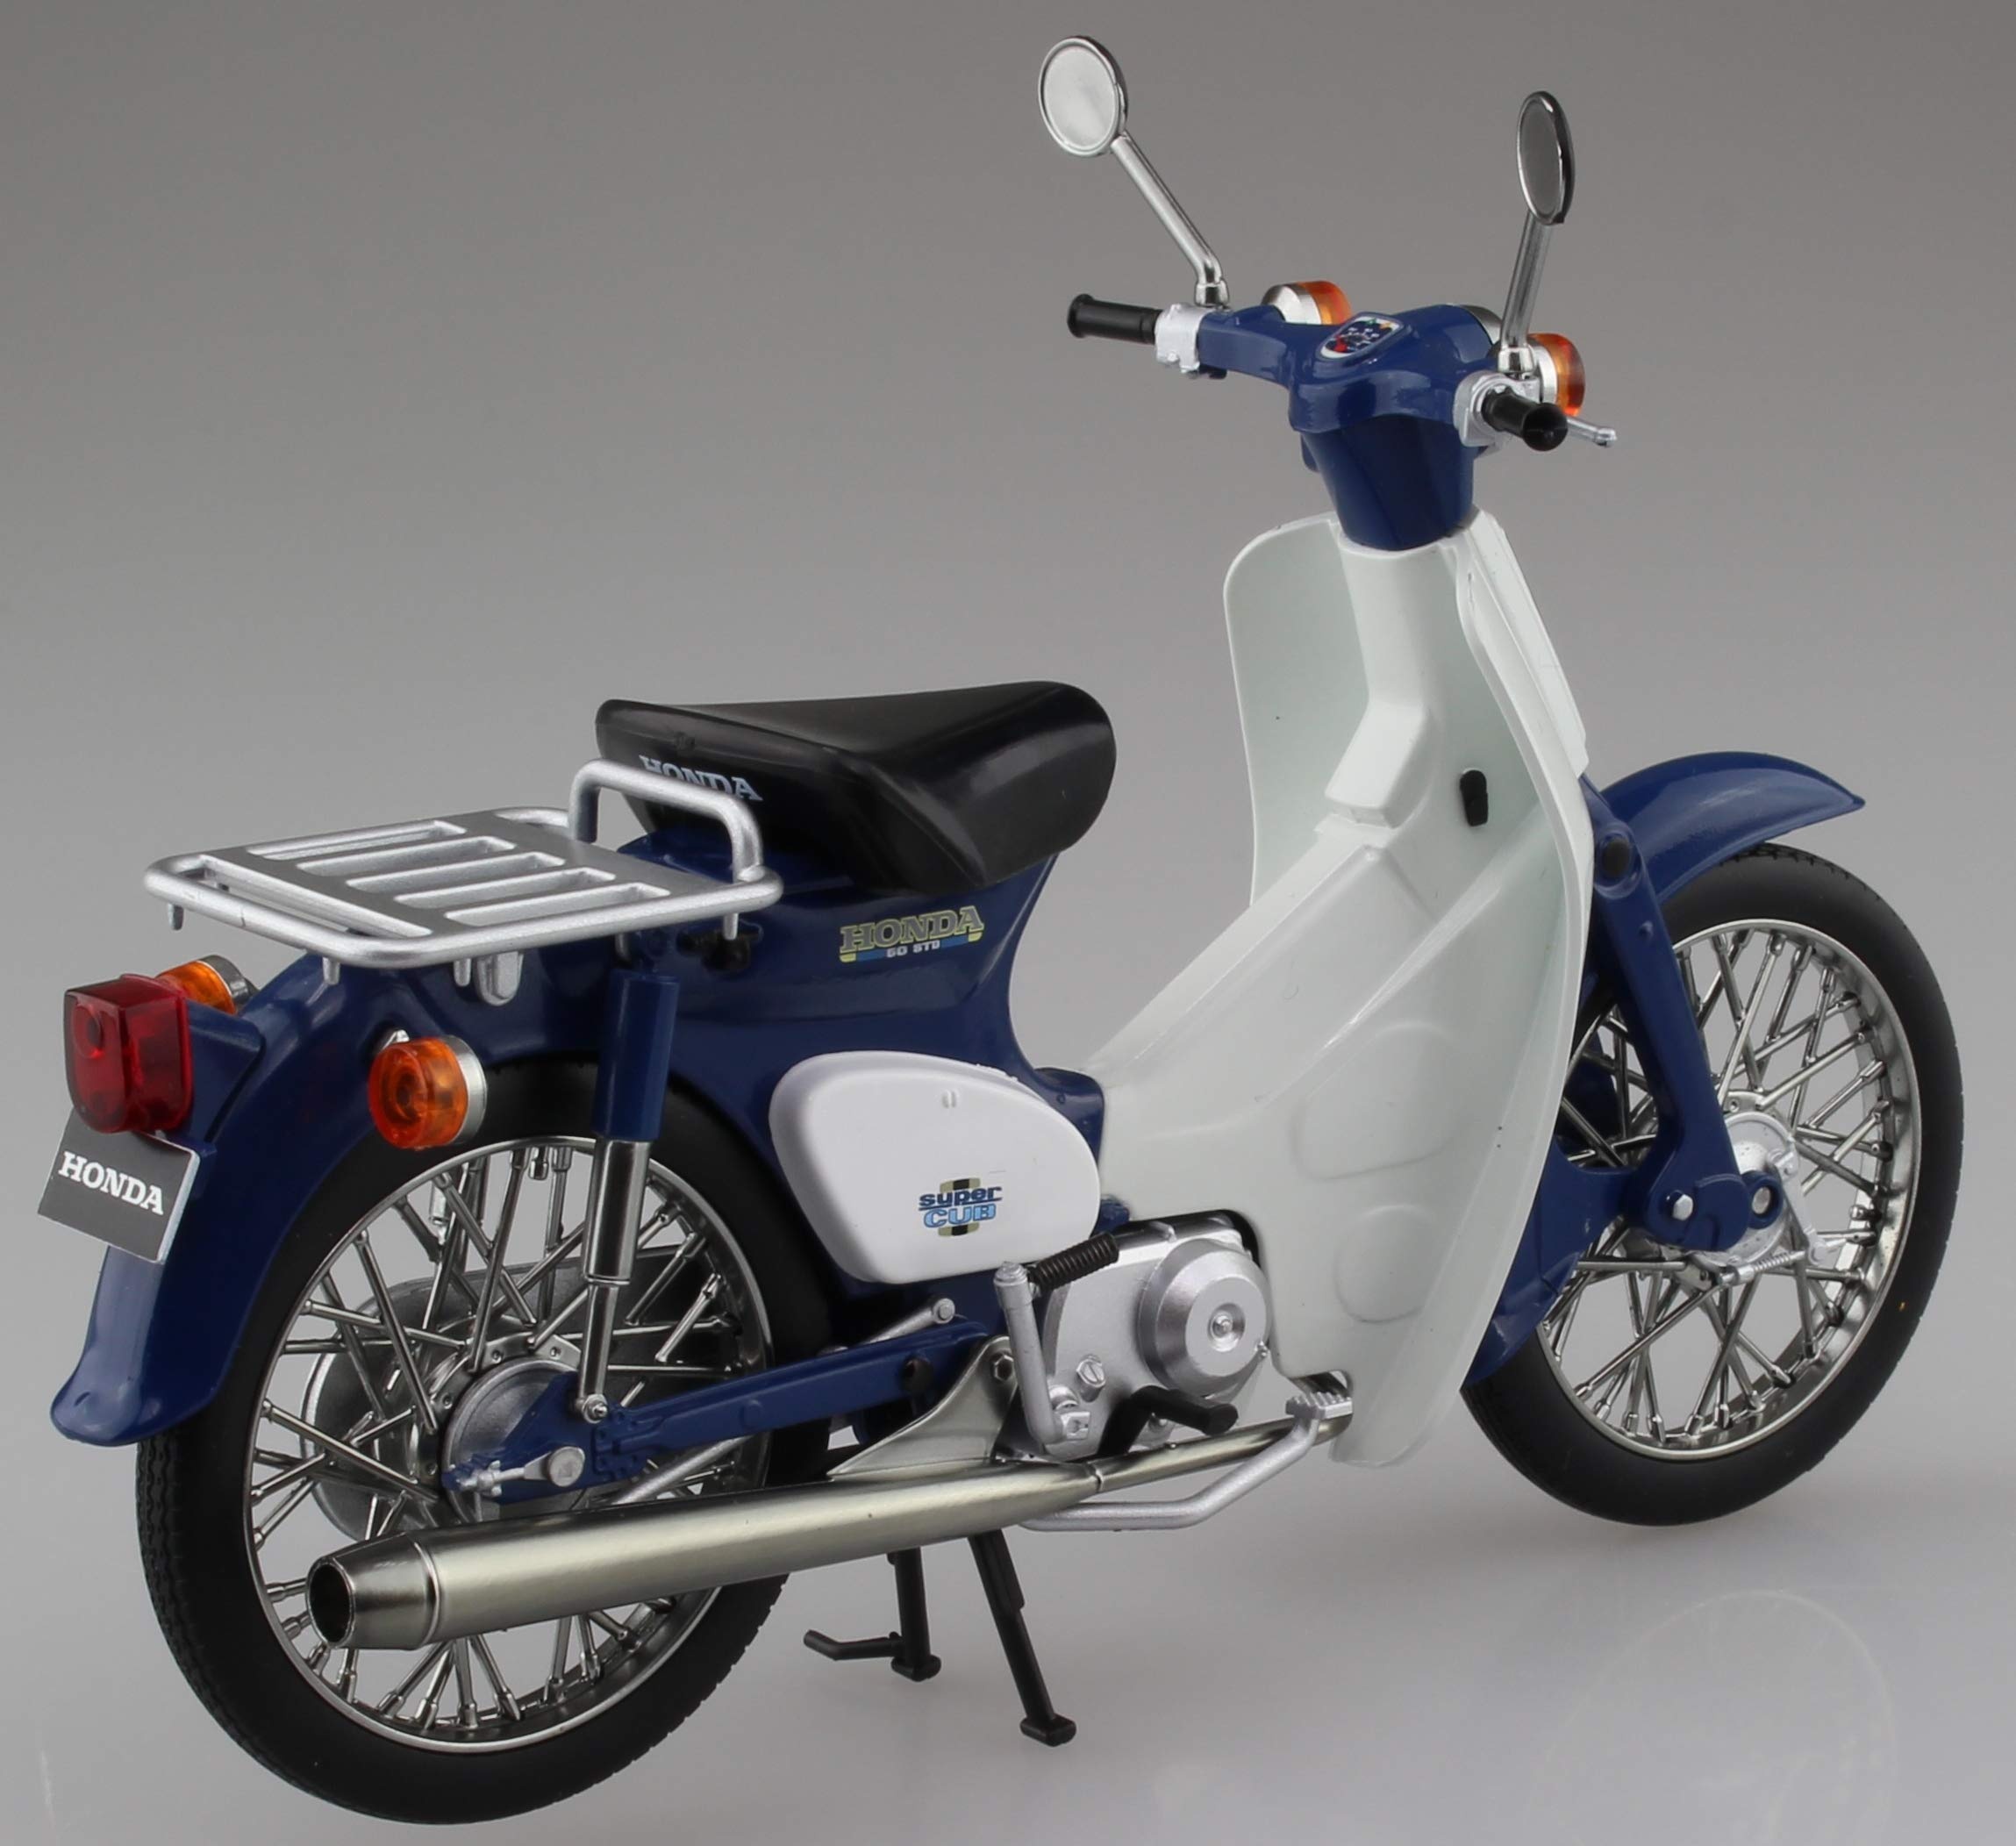 Honda Super Cub, Skynet 112 completed bike, Iconic blue color, Vintage charm, 2300x2110 HD Desktop